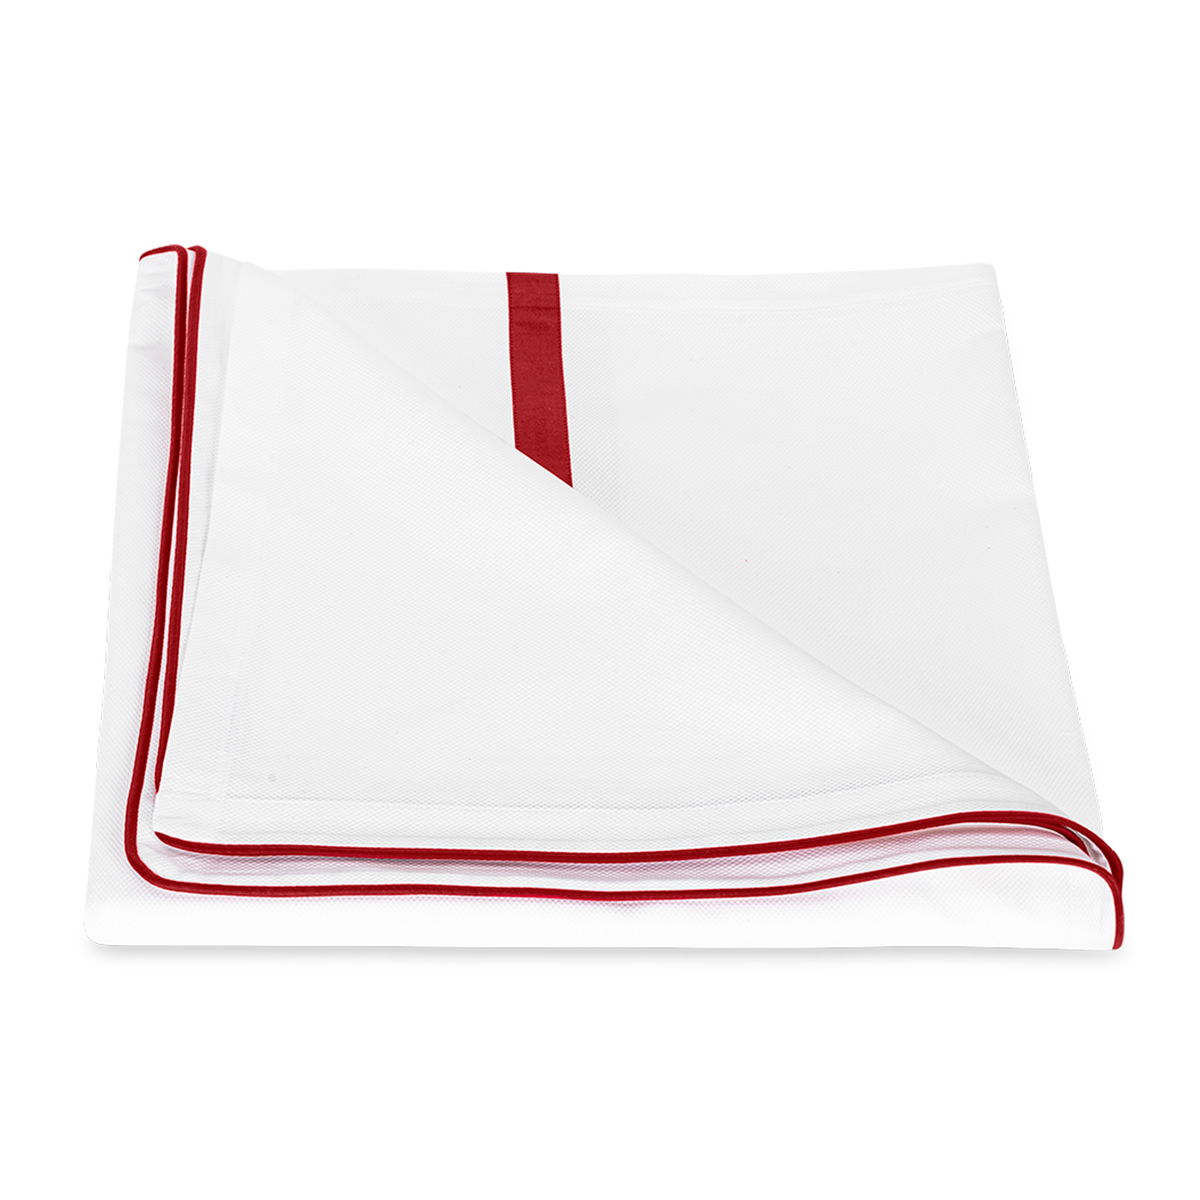 Folded Duvet Cover of Matouk Louise Pique Bedding in Color Scarlet